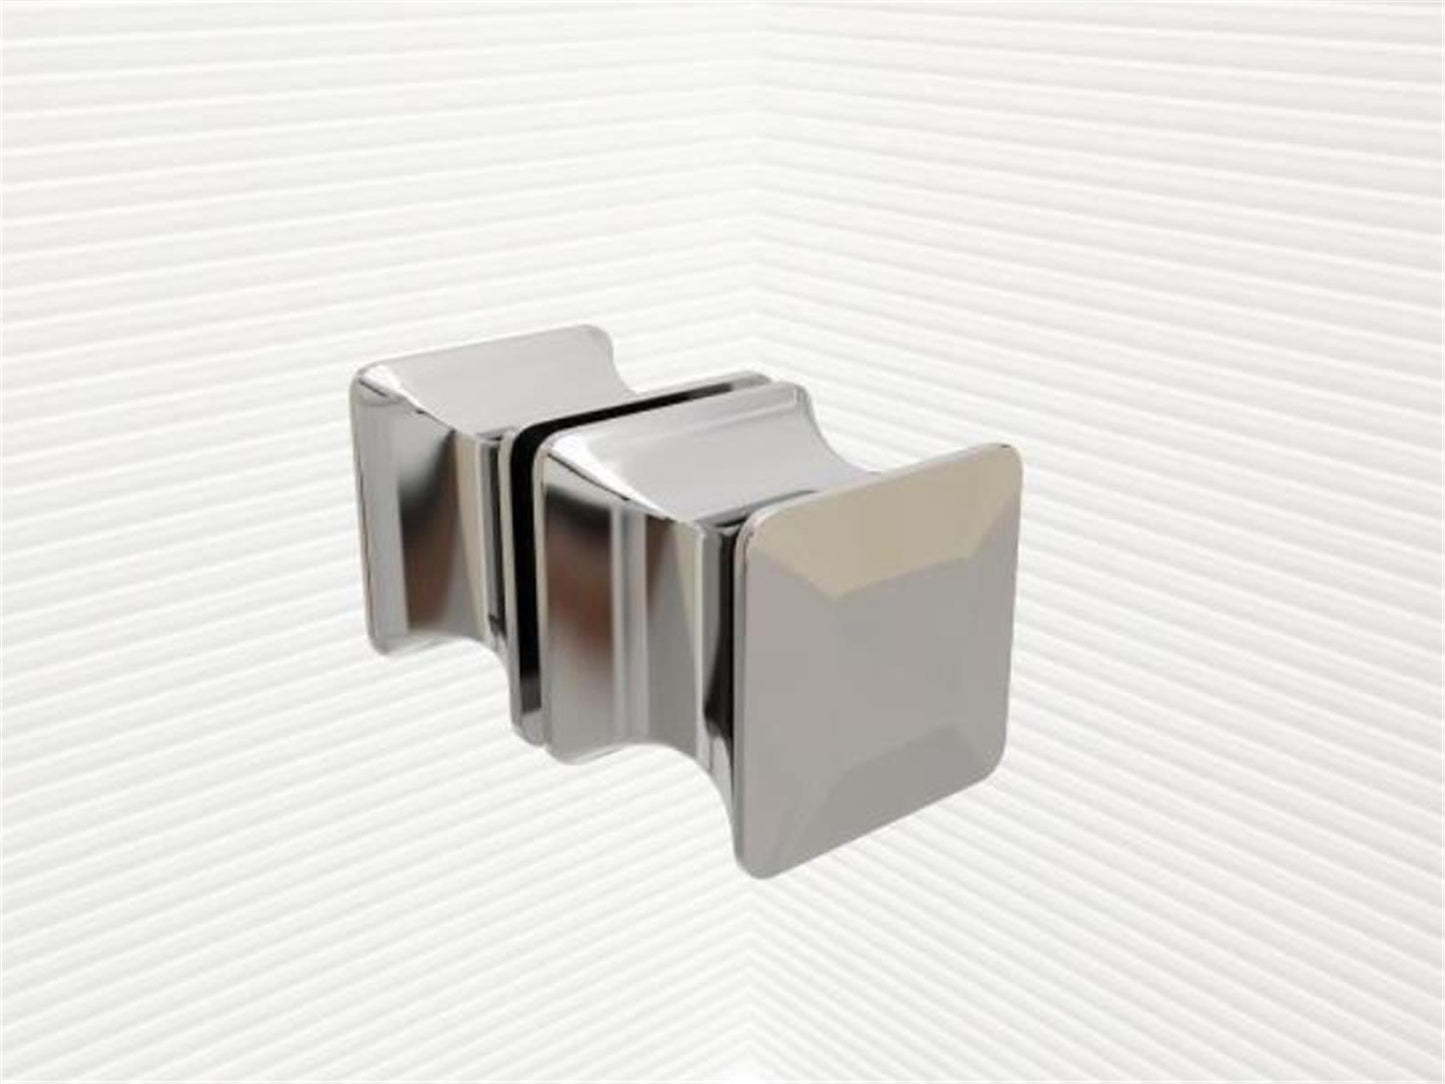 GlasHomeCenter - Cabina de ducha en forma de U "Asuka" (100x80x180cm) - 8mm - cabina de ducha de esquina - mampara de ducha - sin plato de ducha